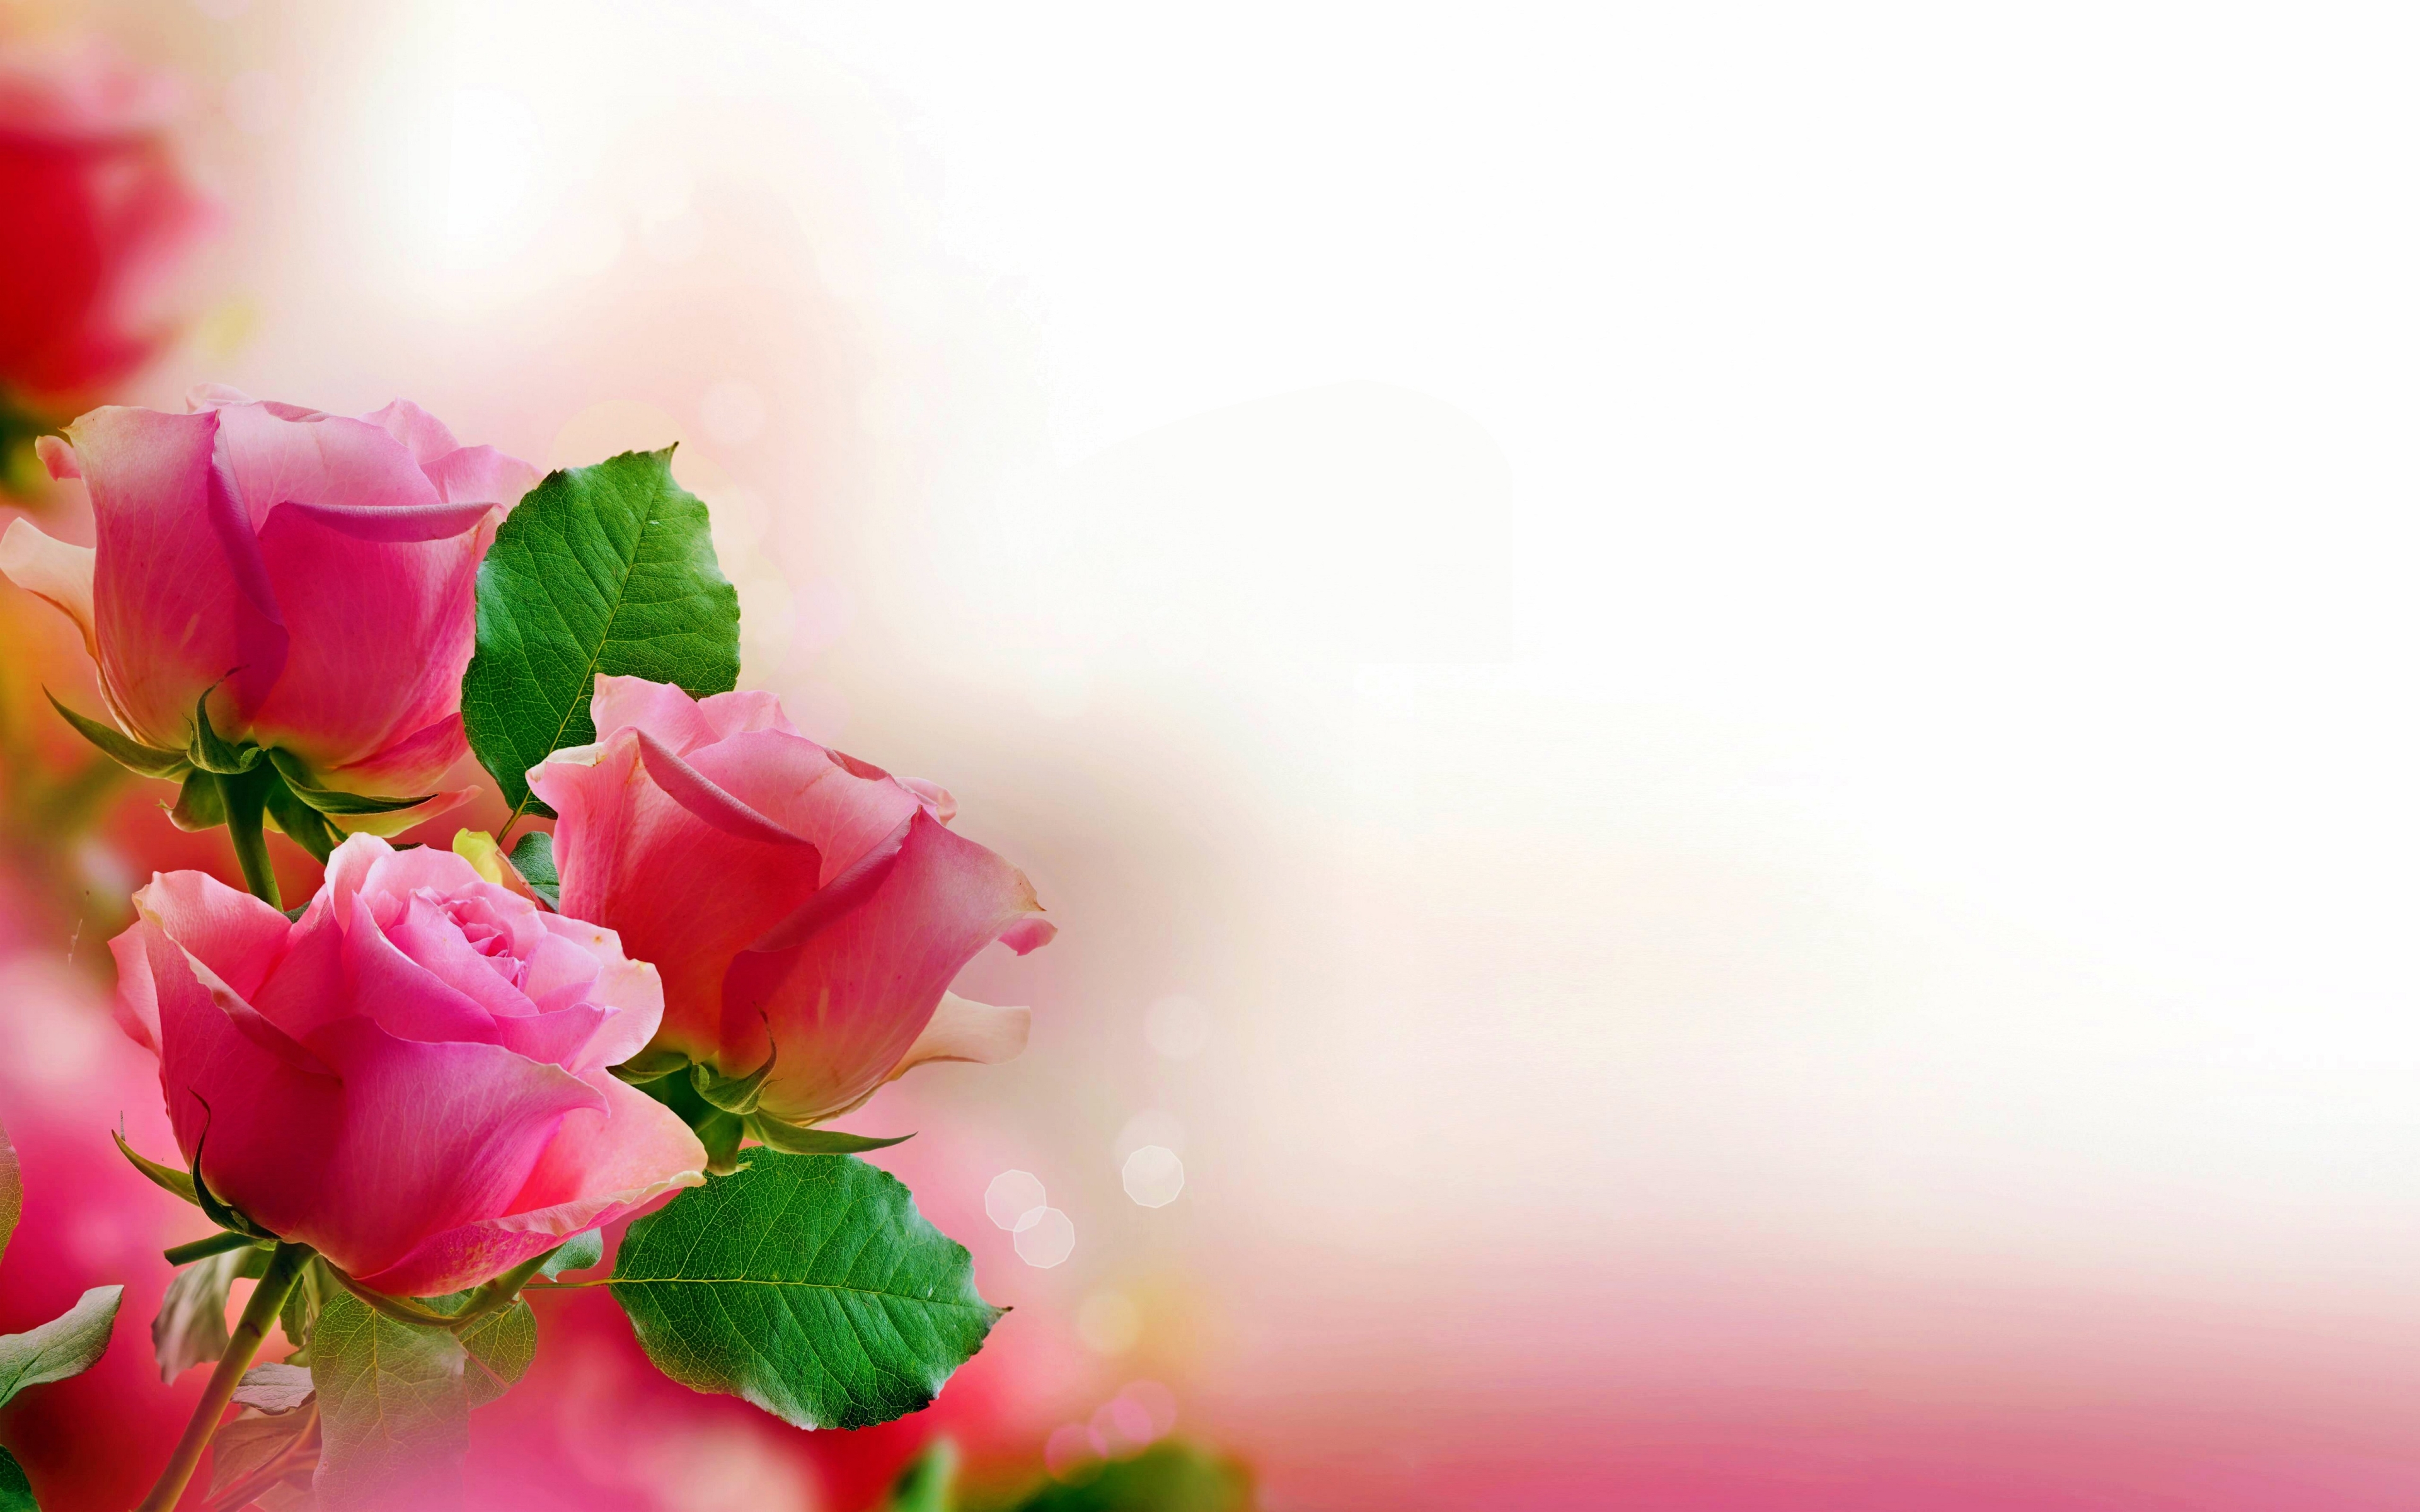 Pink Roses for 3840 x 2400 4K Retina Display resolution